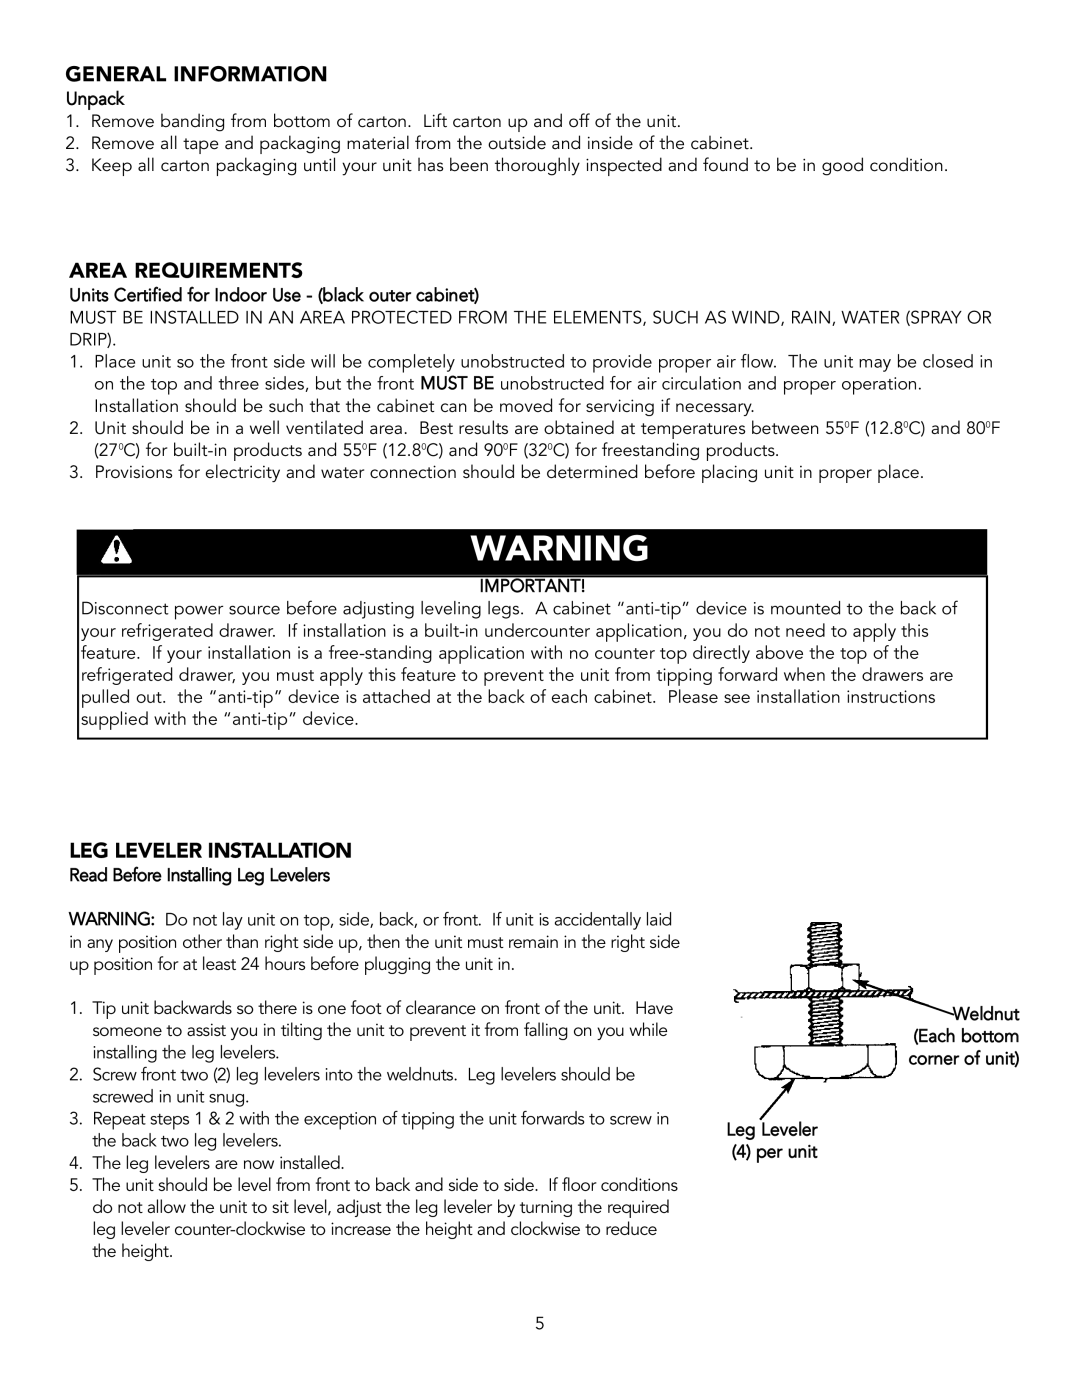 Viking Refrigerator Drawer manual General Information, Area Requirements, Leg Leveler Installation 